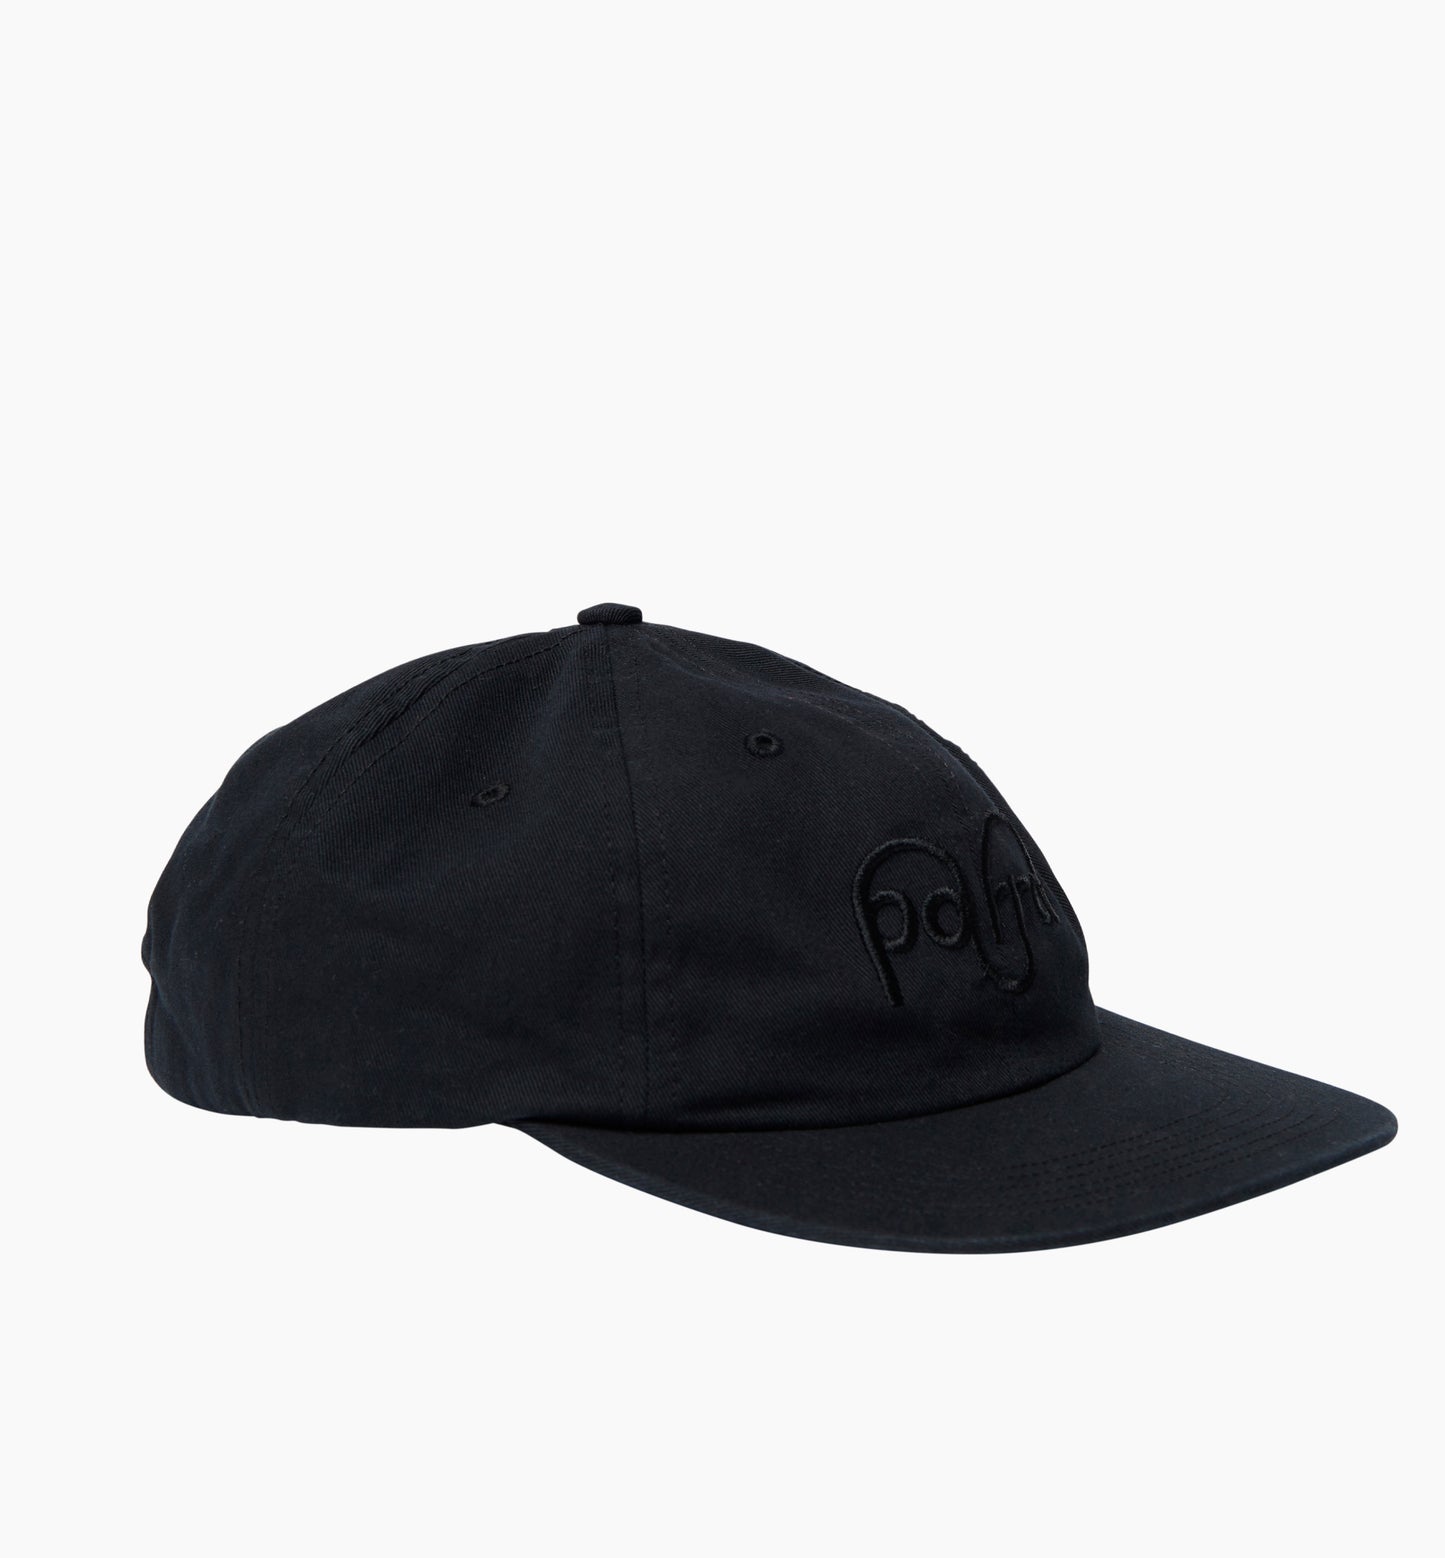 By Parra Weird Logo 6 Panel Hat Black